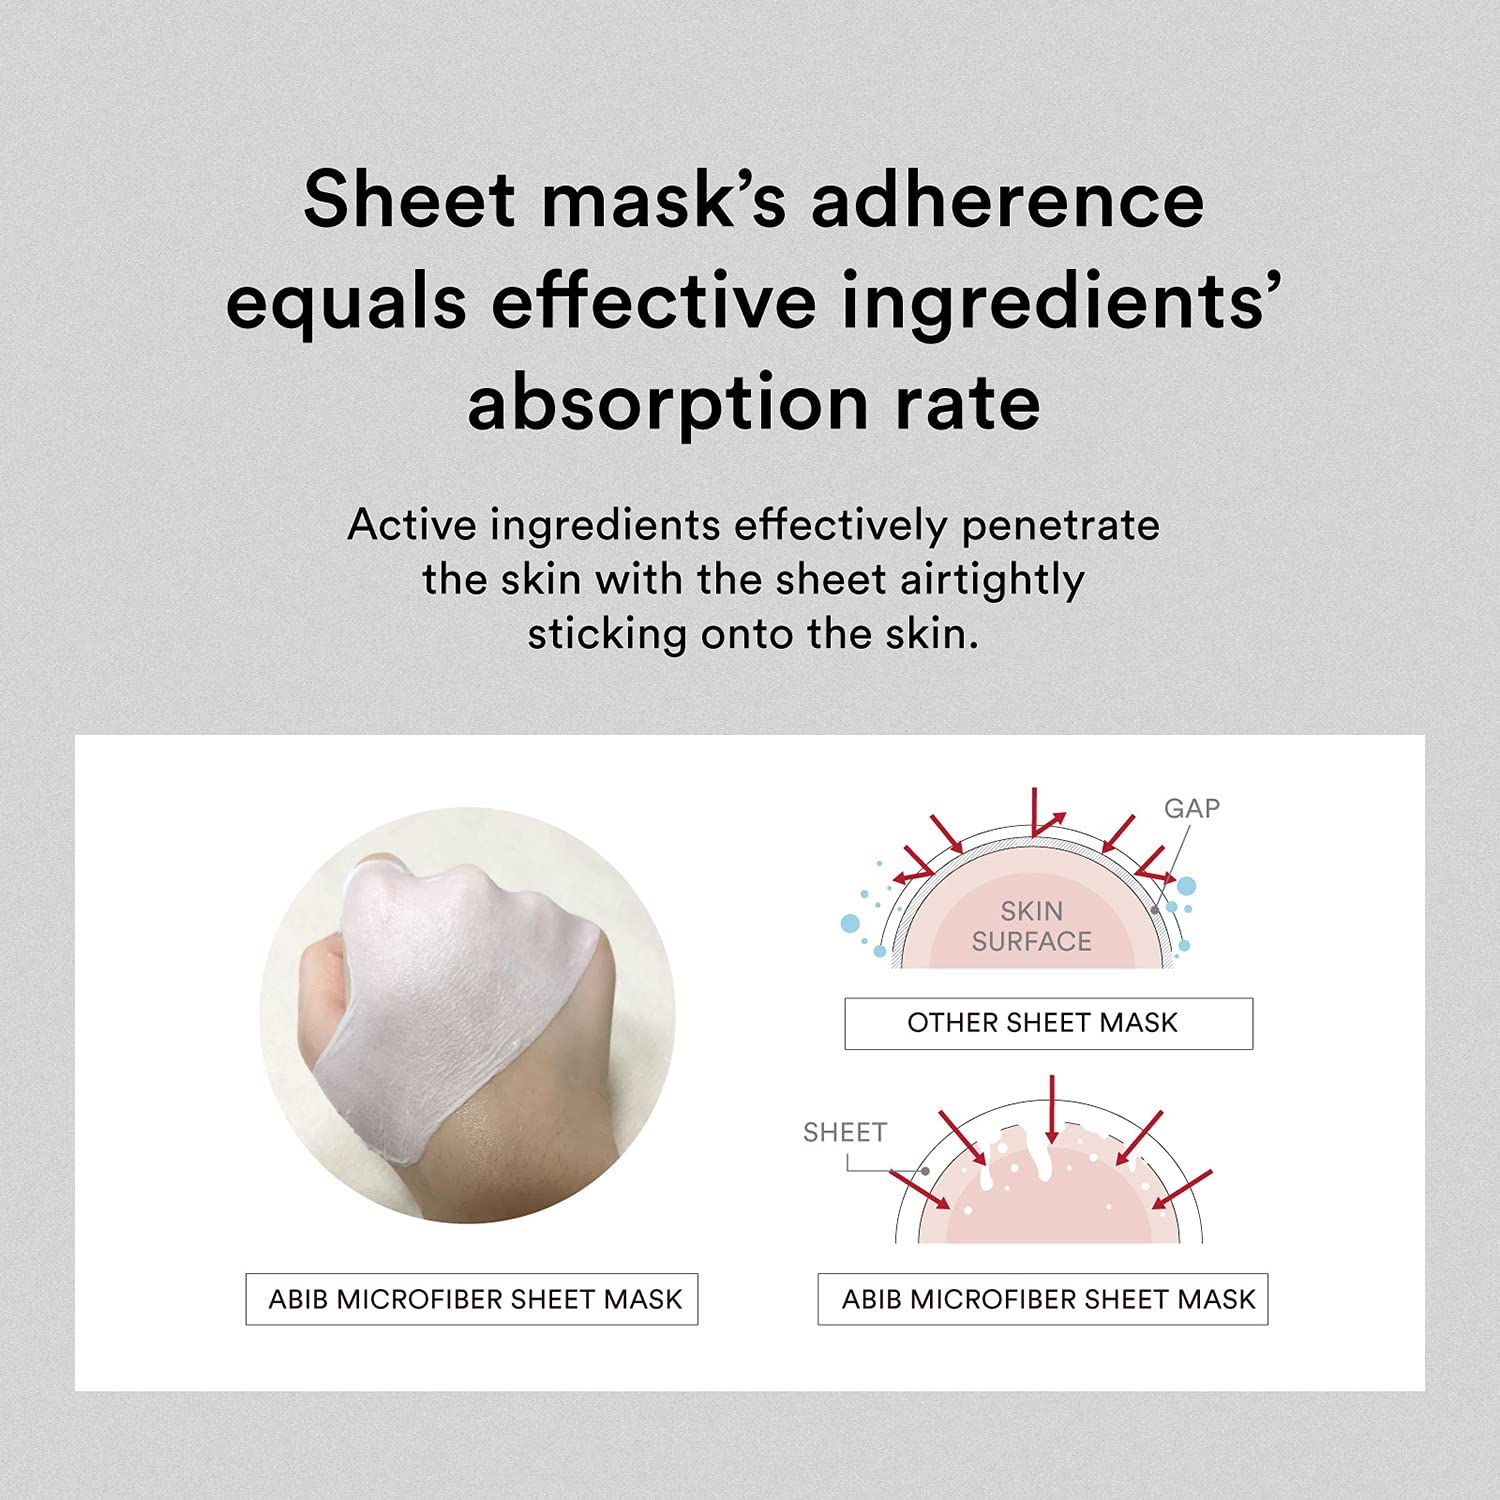 Abib Gummy Sheet Mask Milk Sticker - 1 Sheet